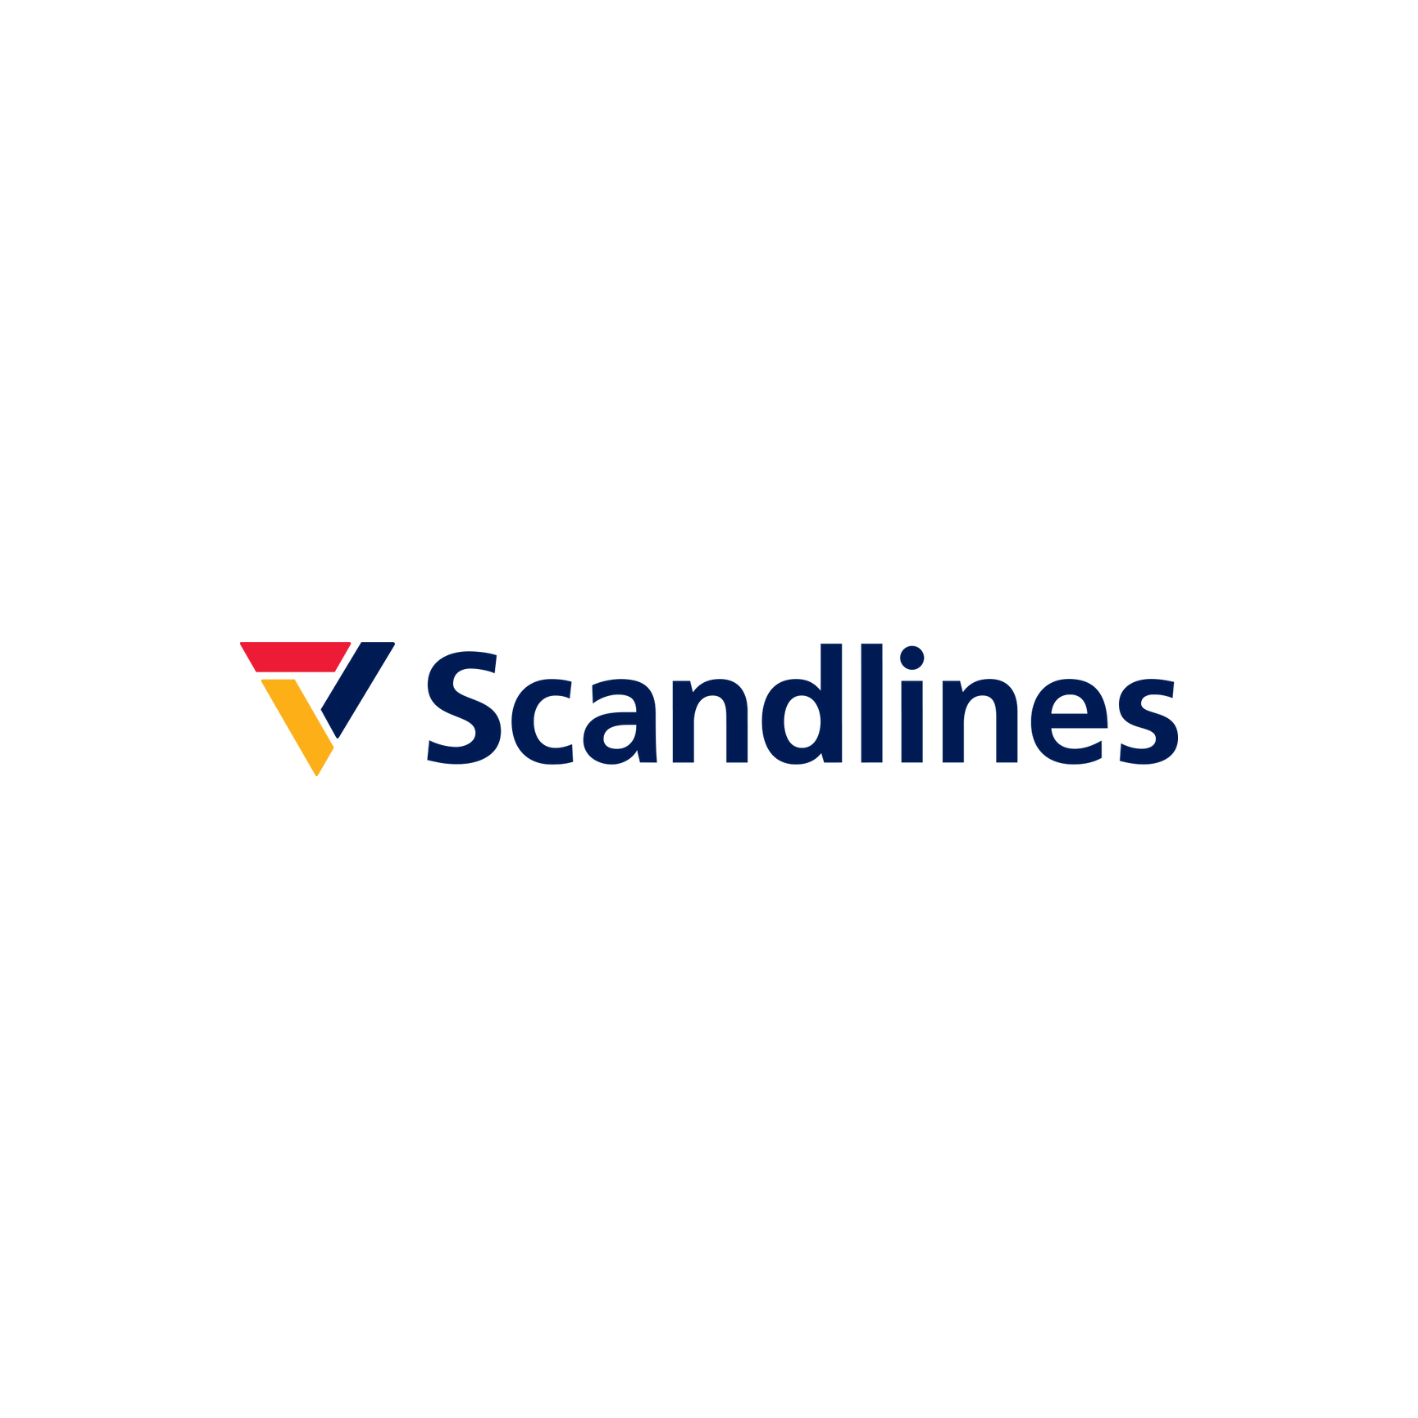 Logotip scandlines